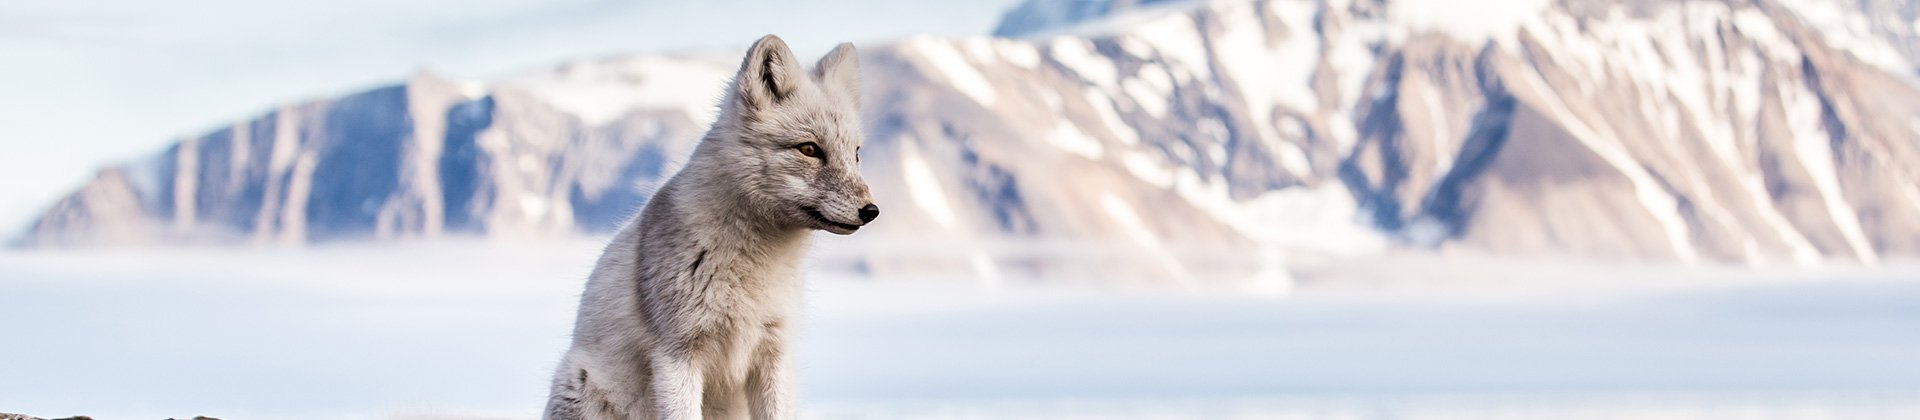 Arctic Fox Svalbard